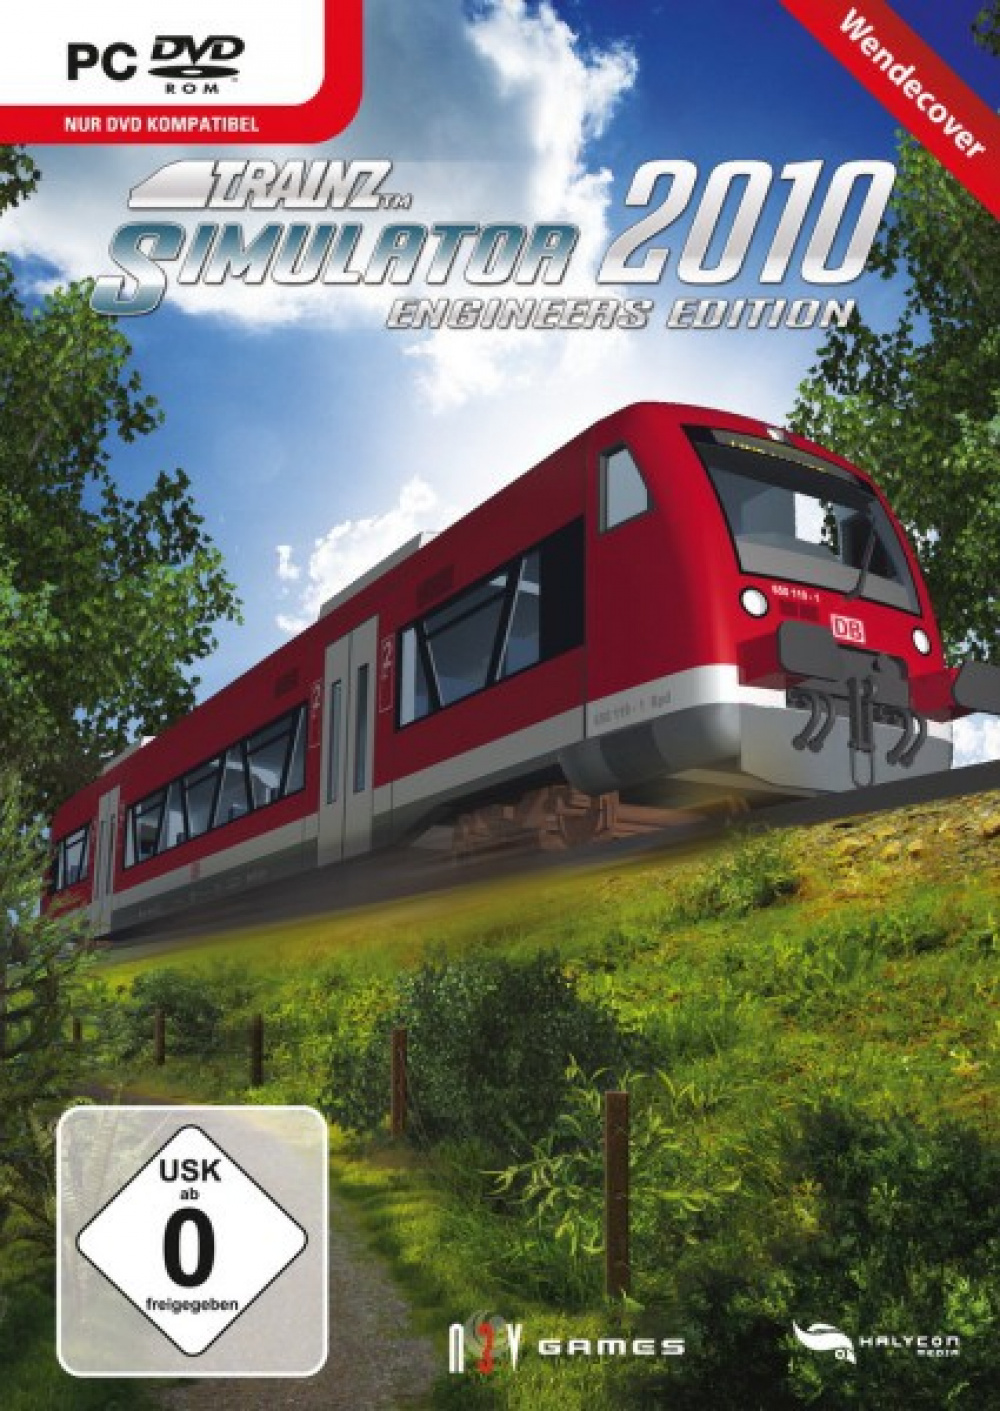 trainz simulator 2010 engineers edition crack